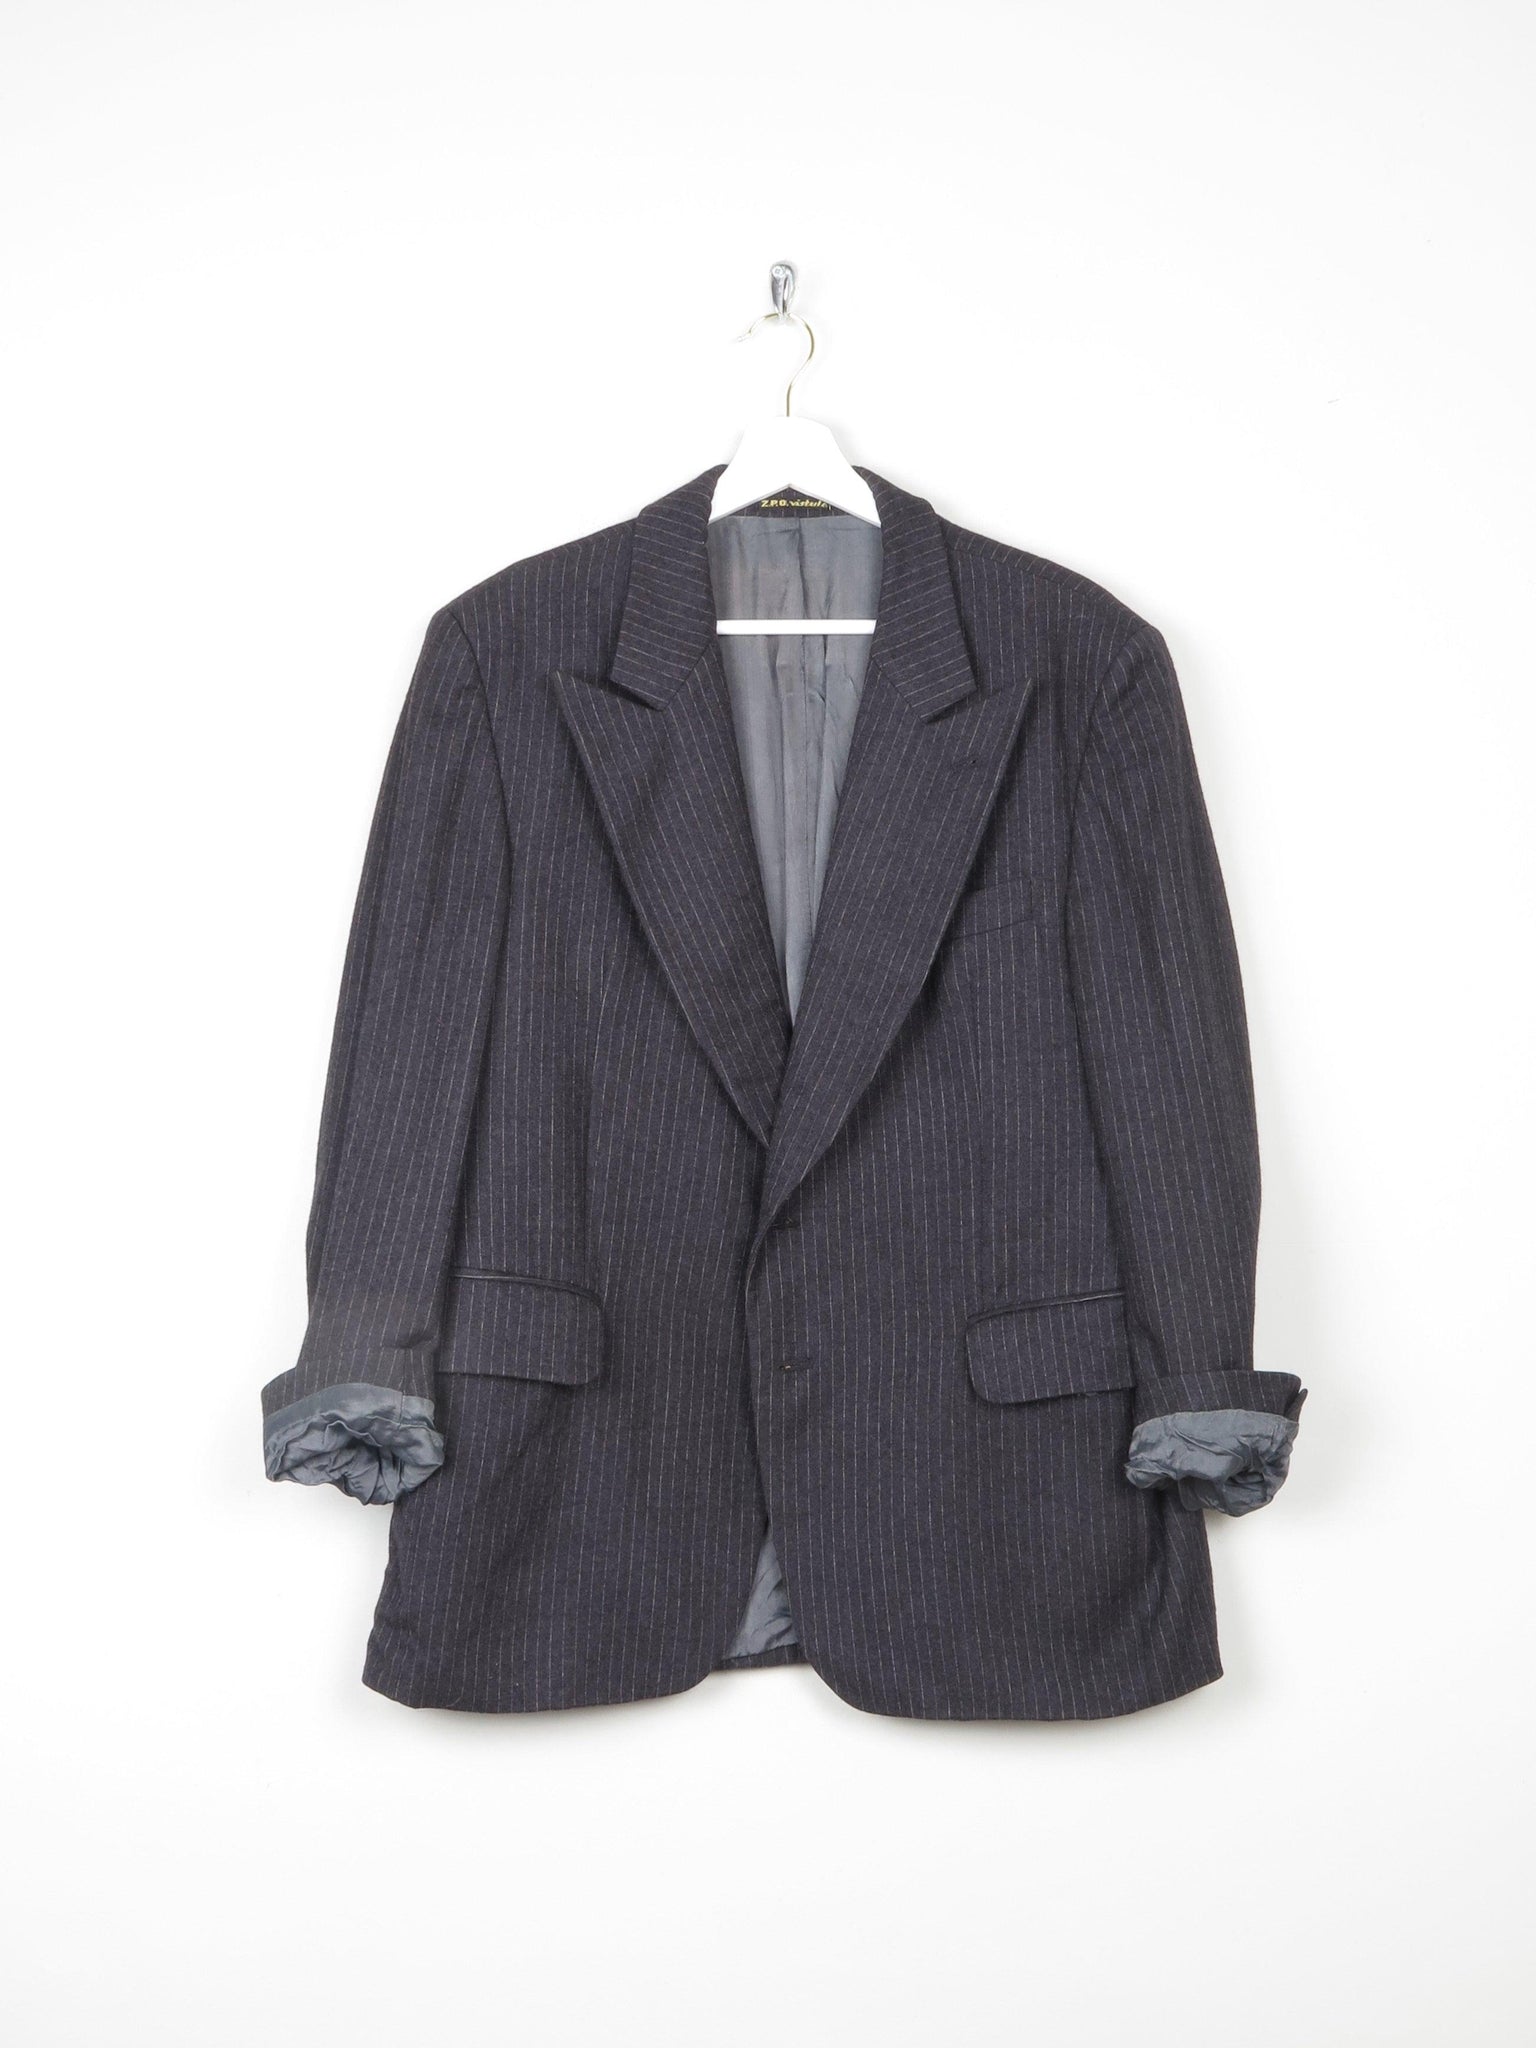 Men's Dark Grey 1970s Pinstripe Jacket 42" - The Harlequin